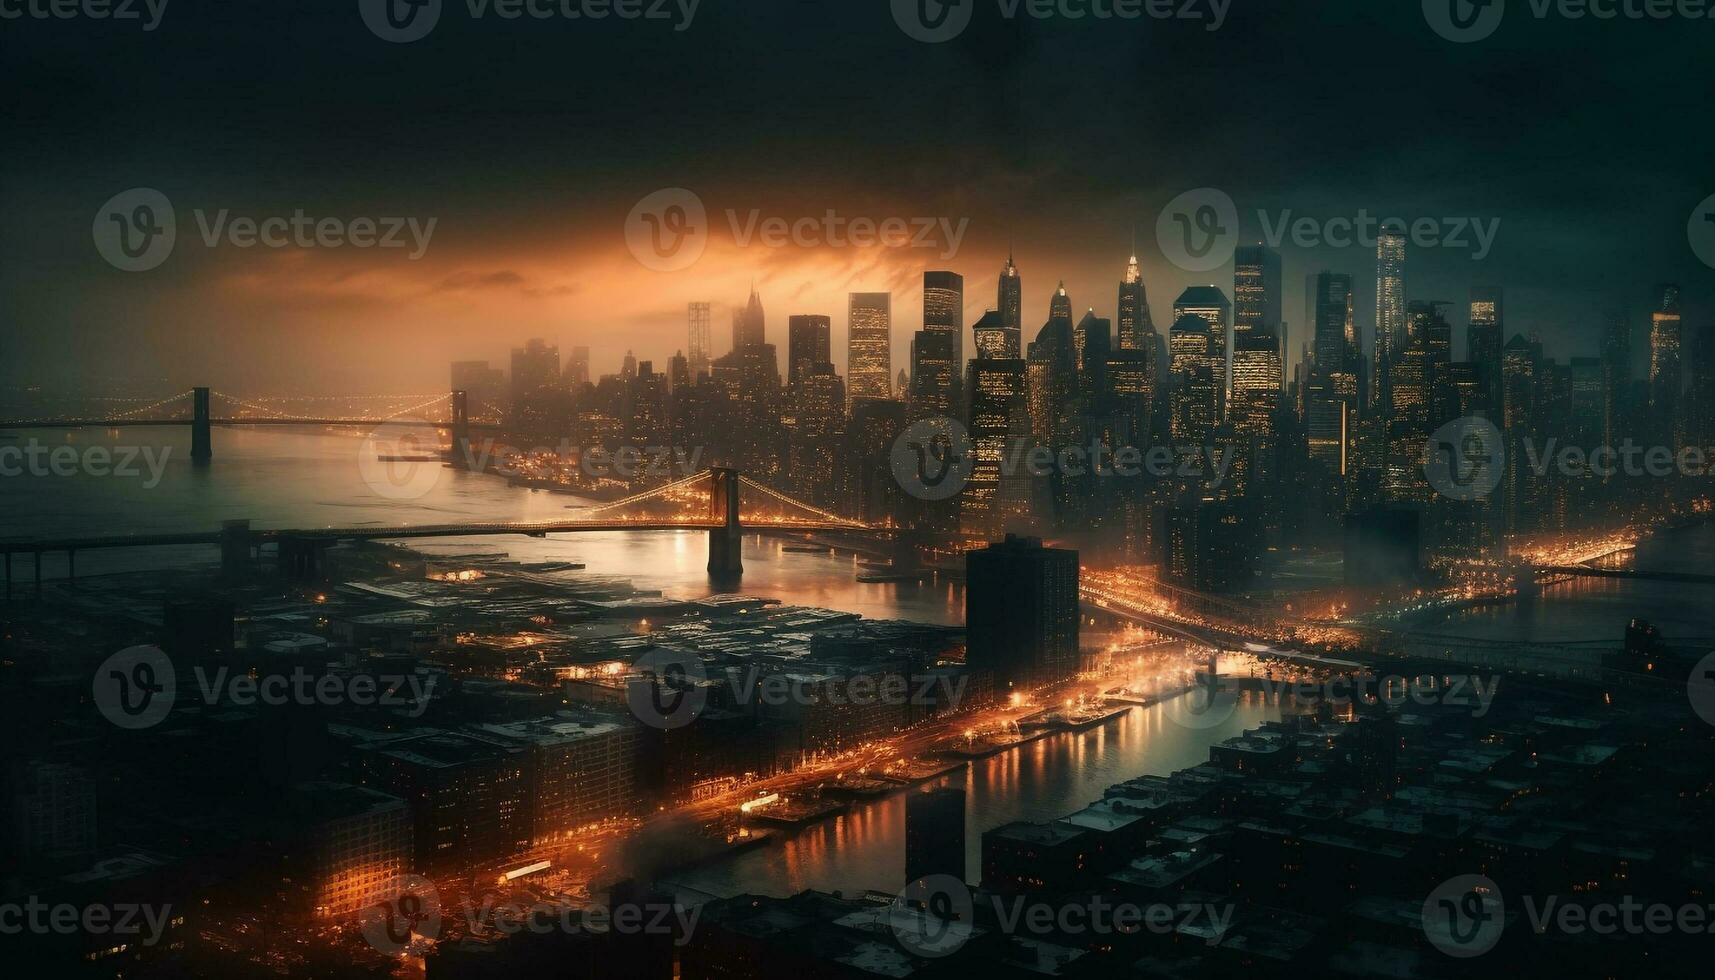 Illuminated city skyline reflects on waterfront at dusk generated by AI photo